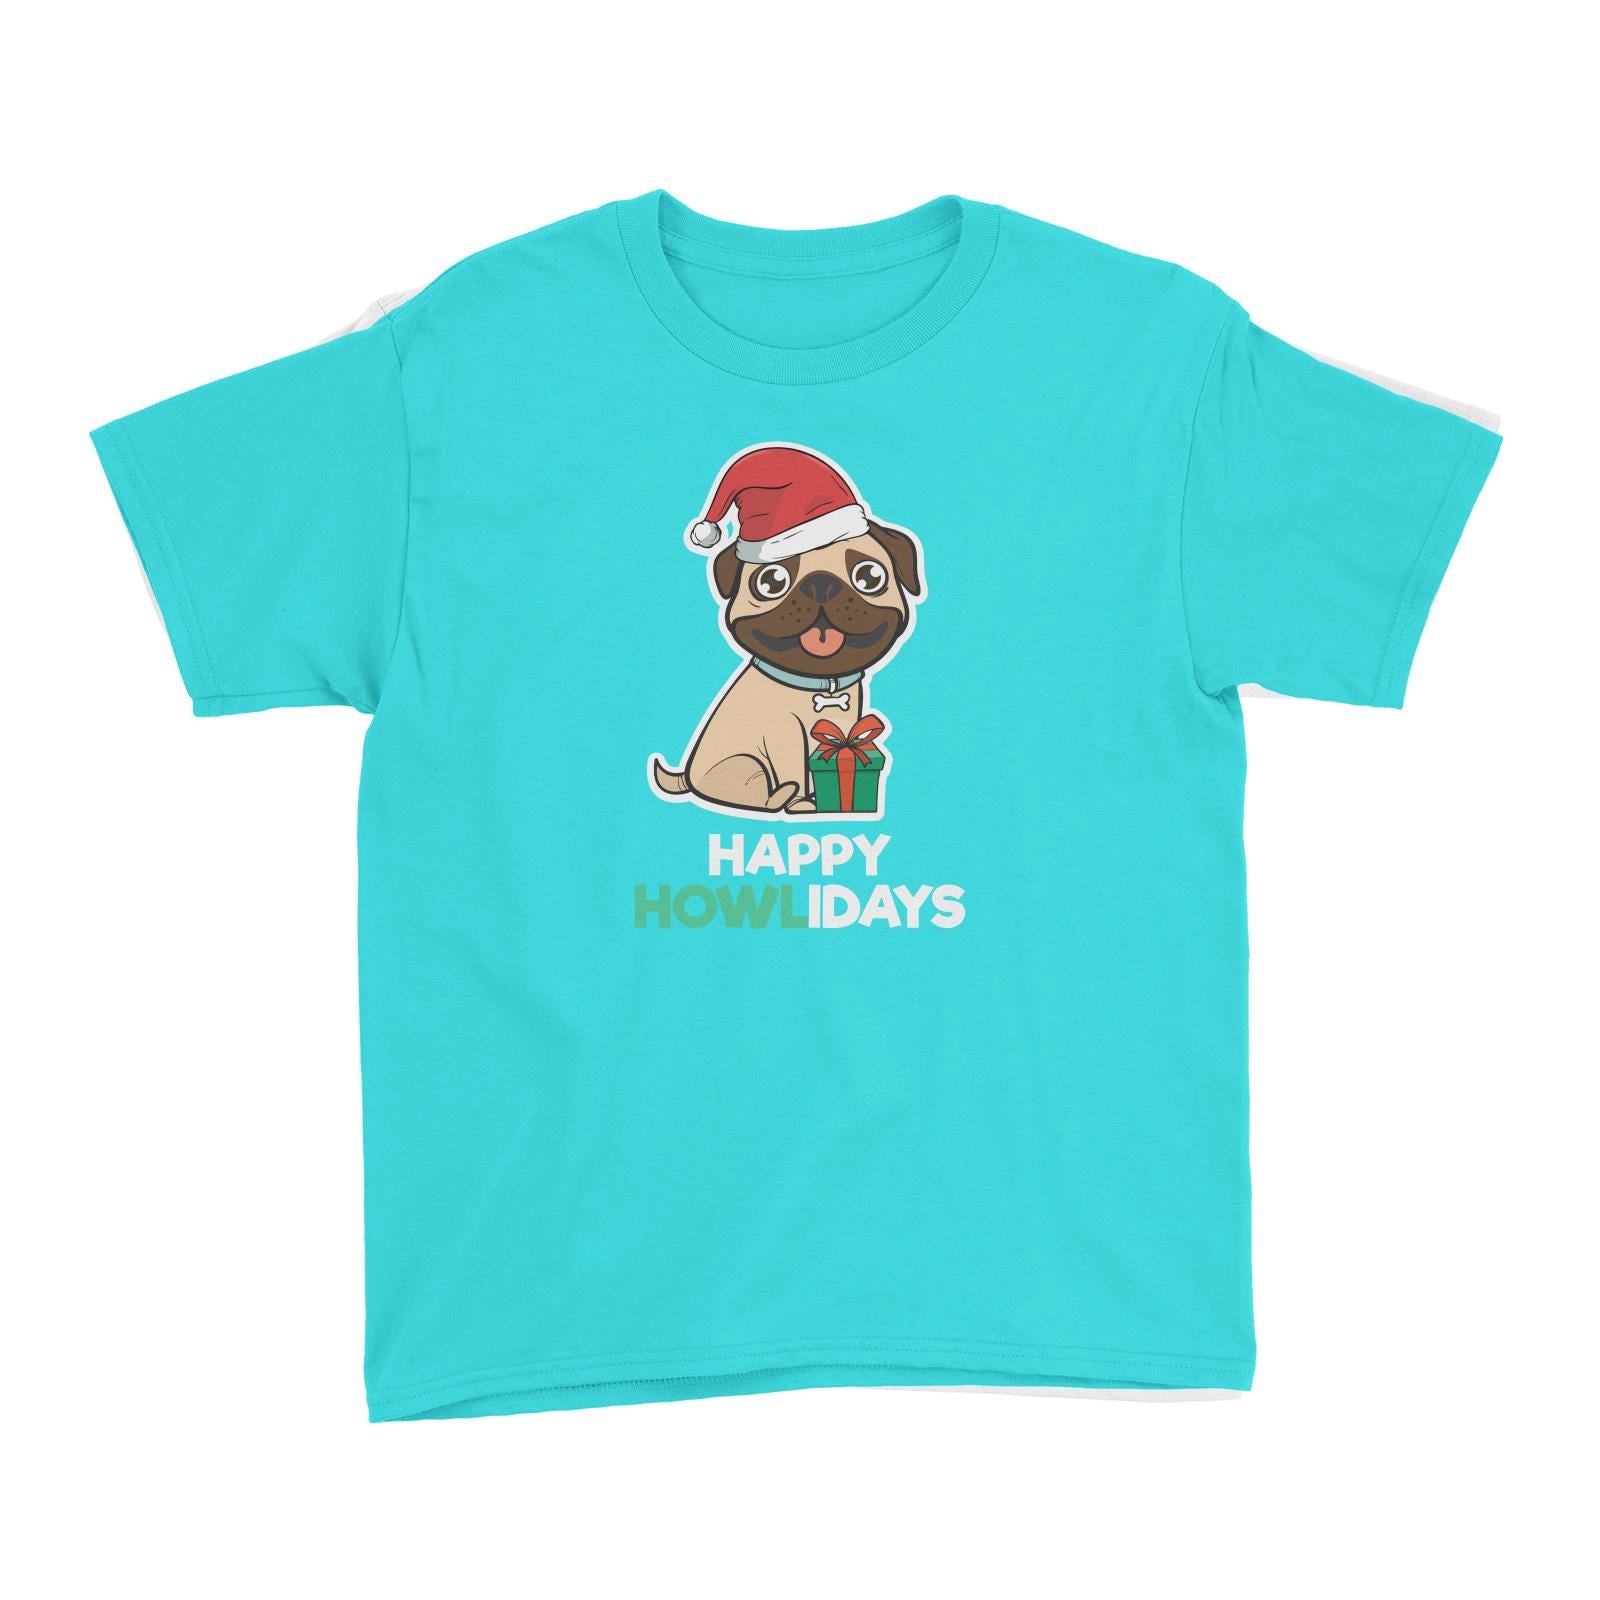 Happy Howlidays Pug Kid's T-Shirt Christmas Animal Funny Cute Dog Lover